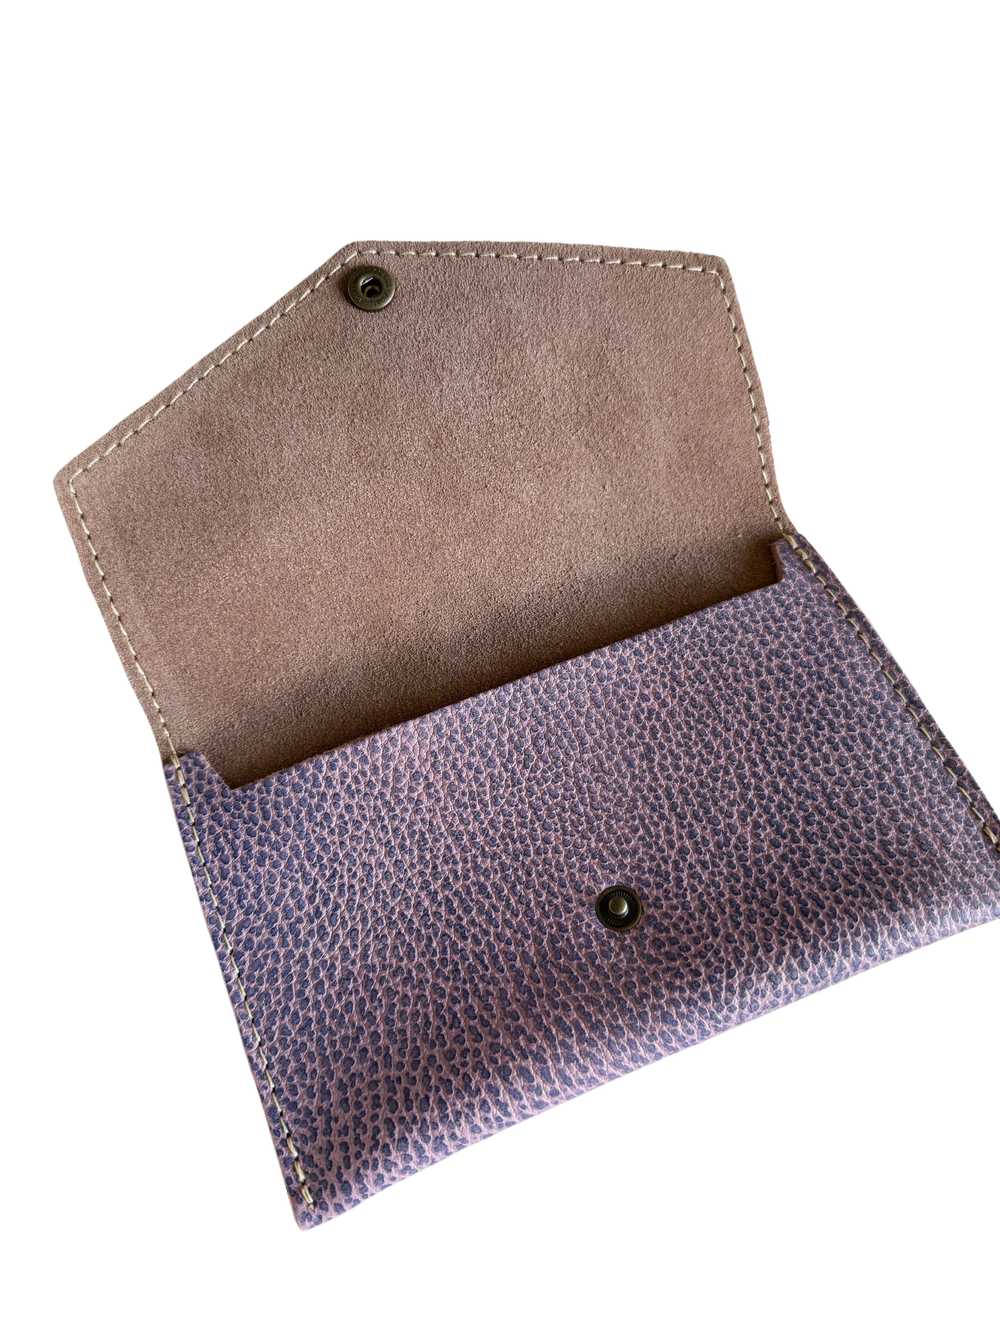 Portland Leather Lilac Envelope - image 2